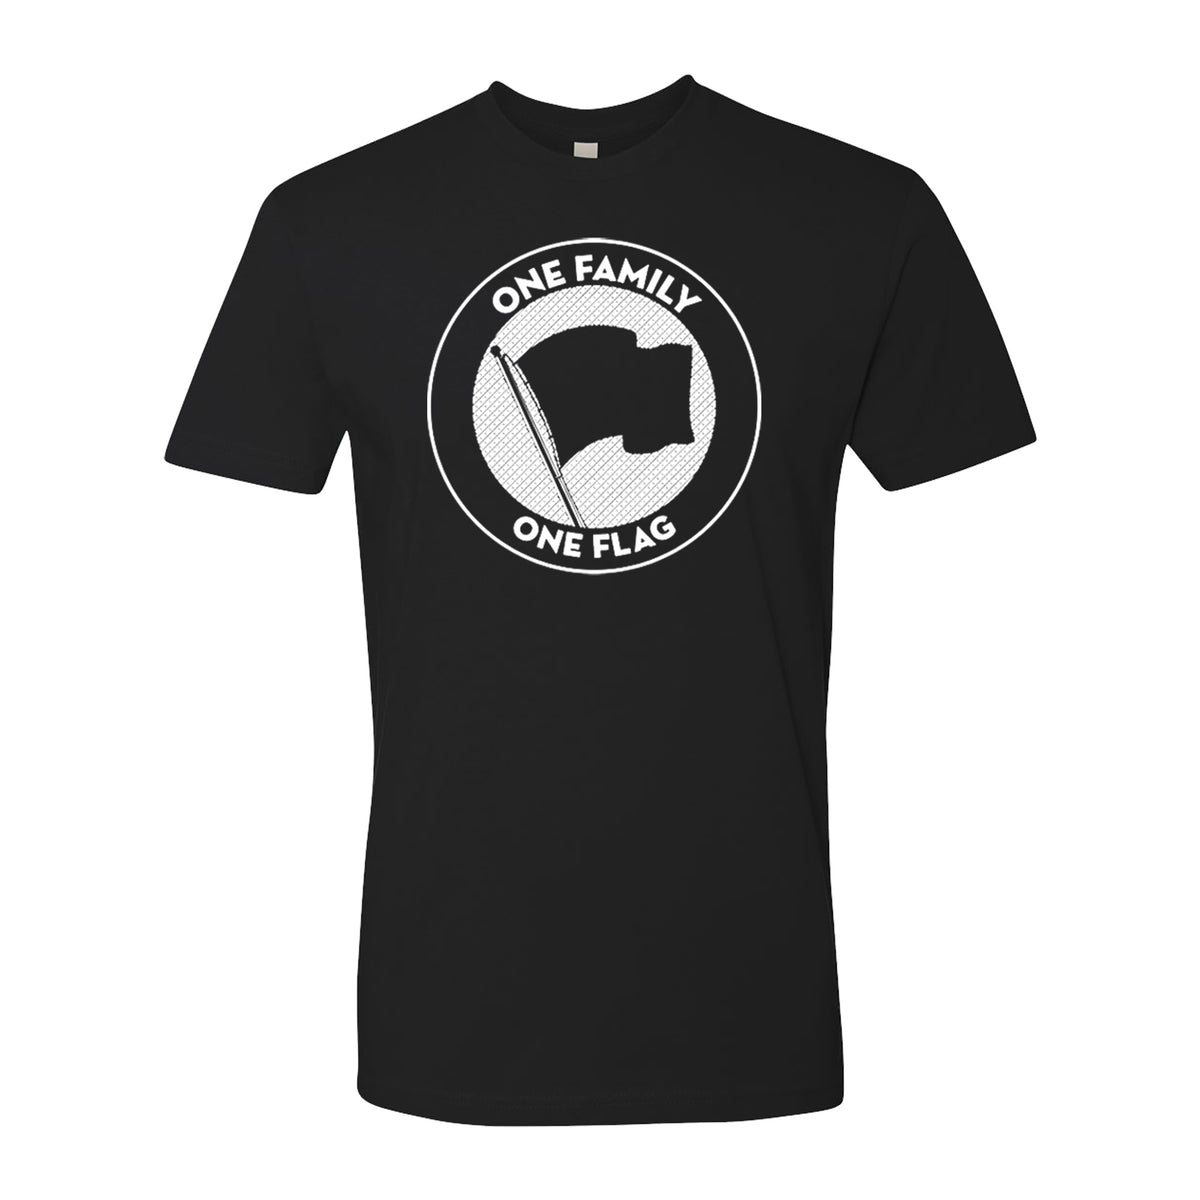 Pirates Press Records - One Family, One Flag Black T-Shirt